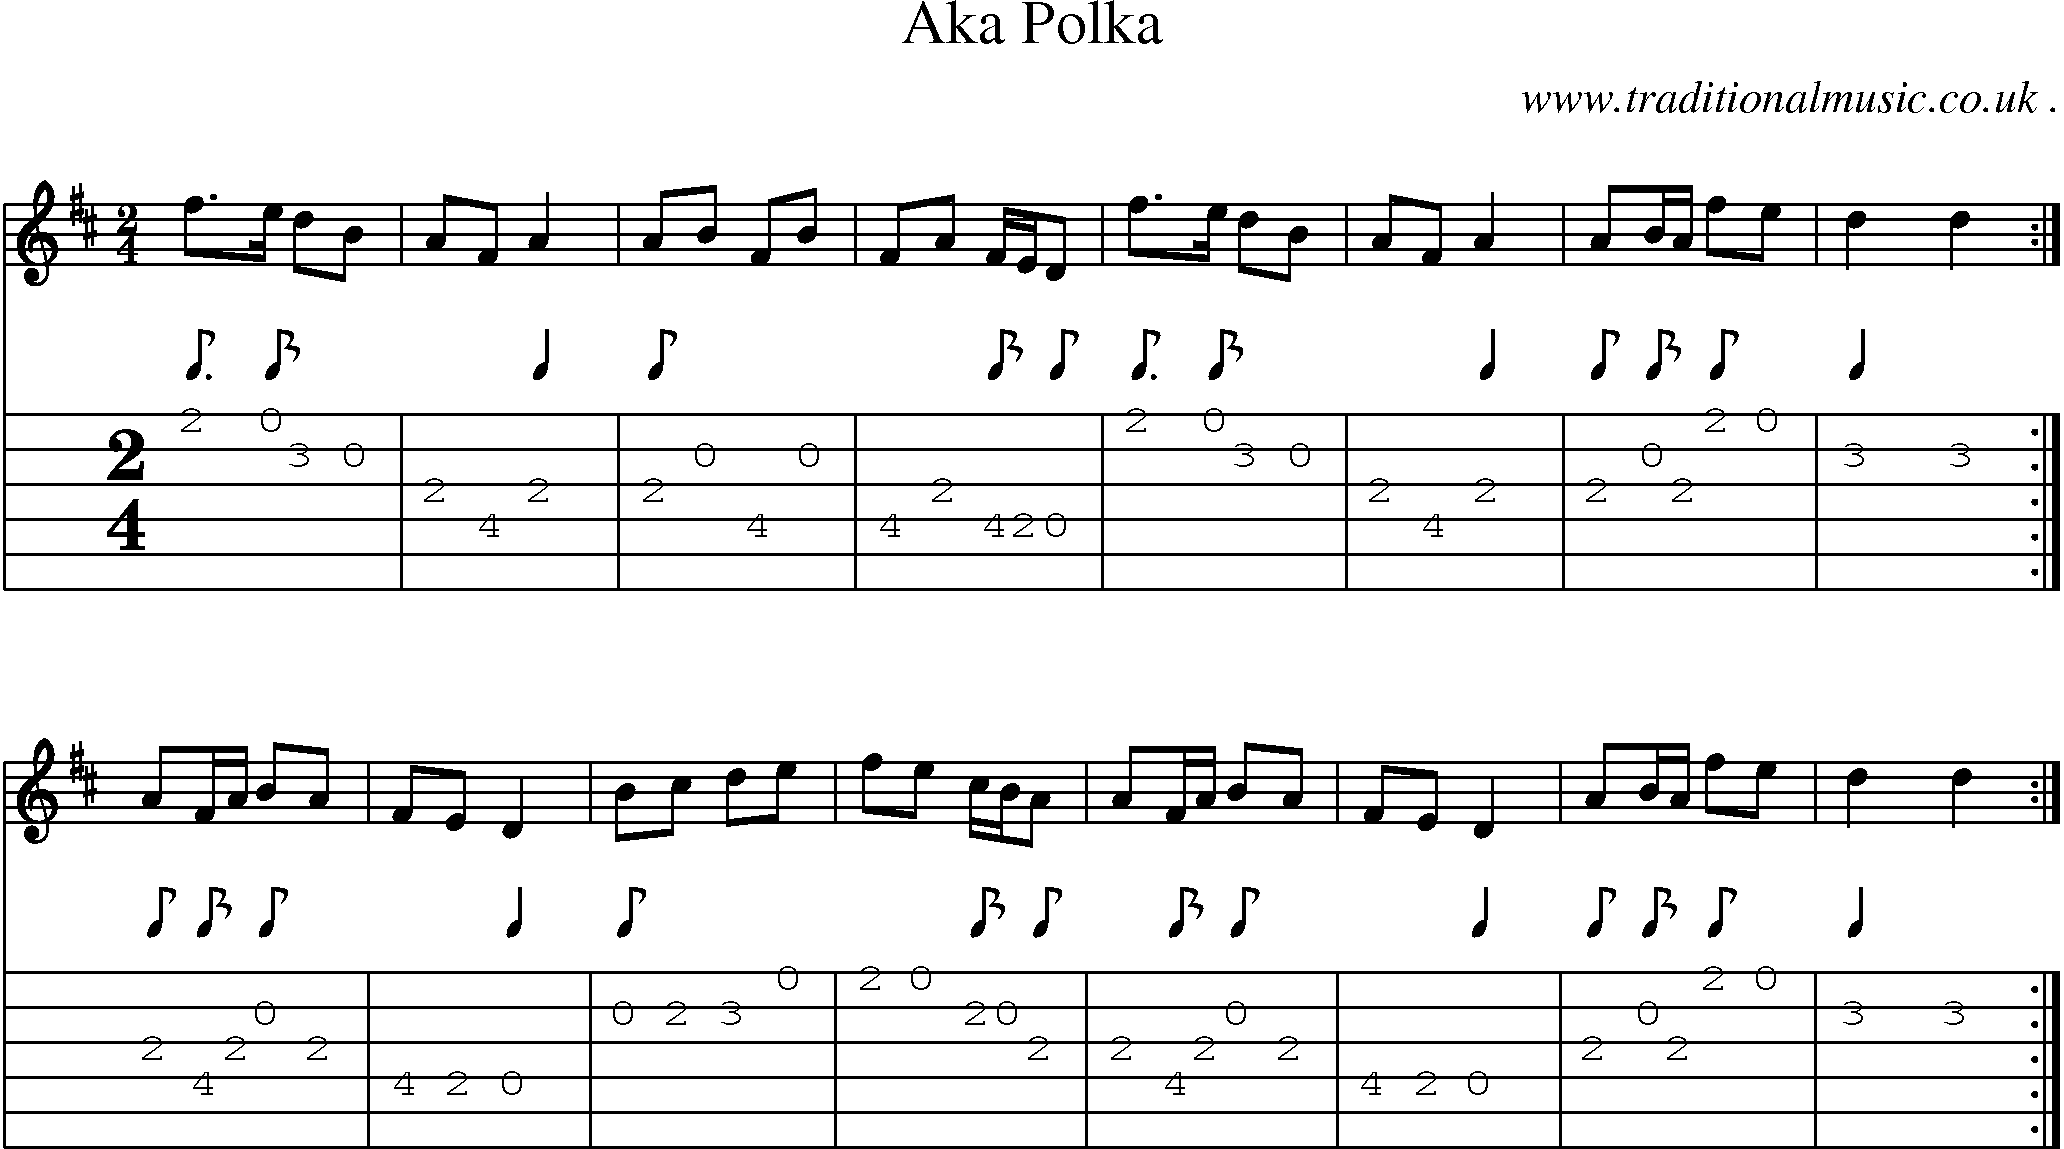 Sheet-Music and Guitar Tabs for Aka Polka